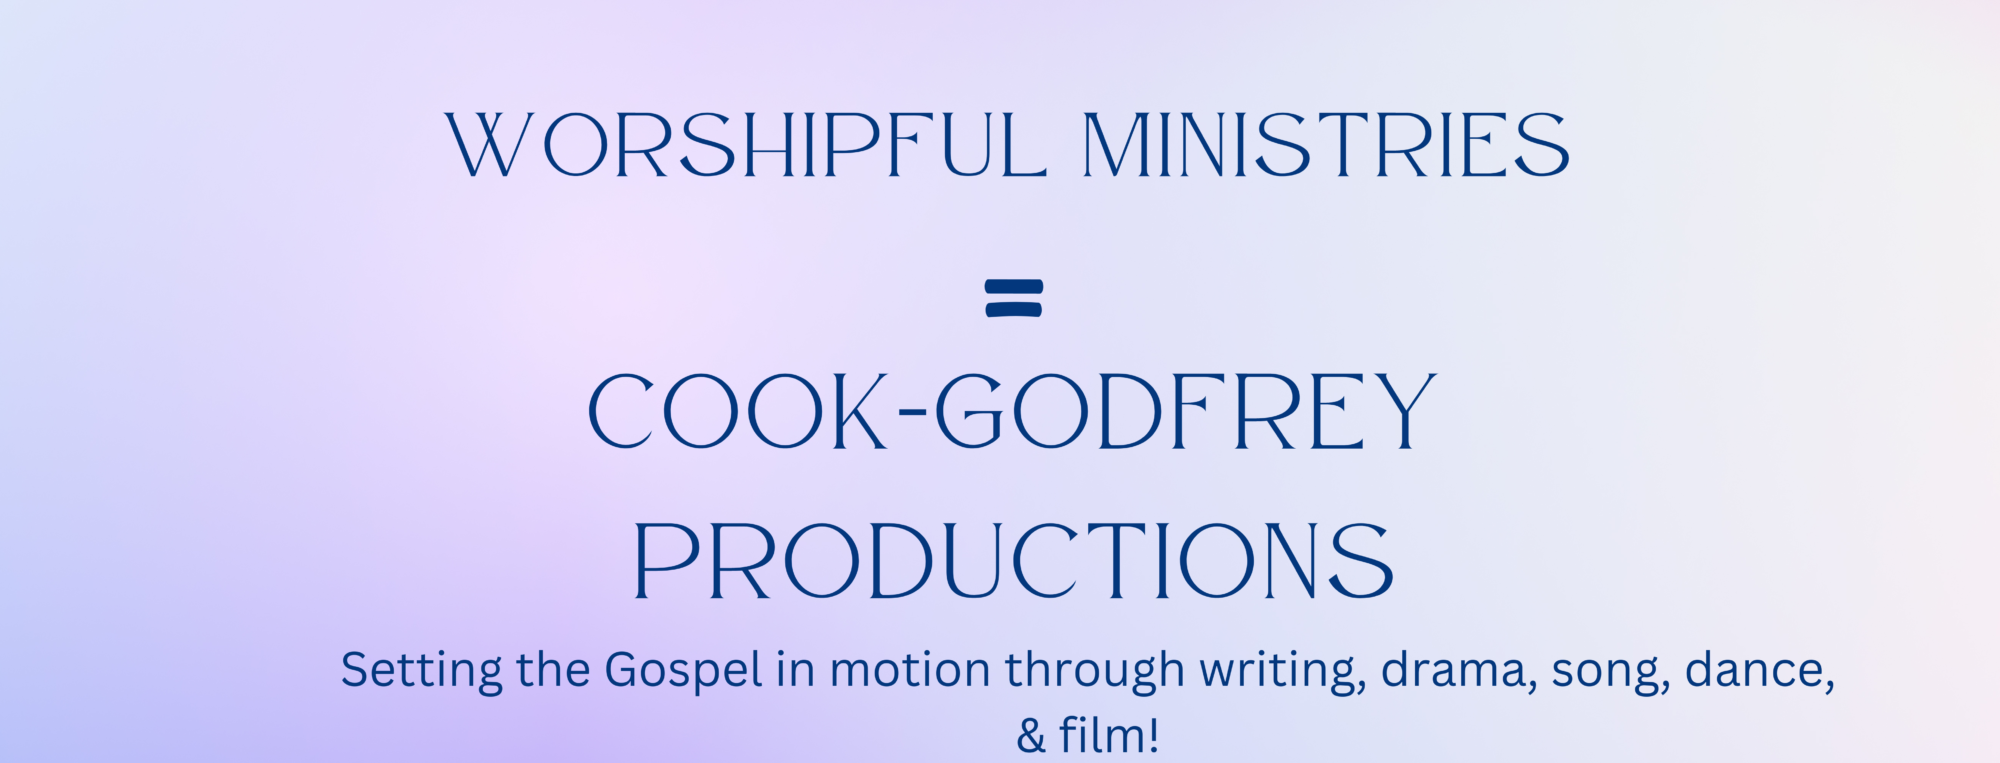 WORSHIPFUL MINISTRIES